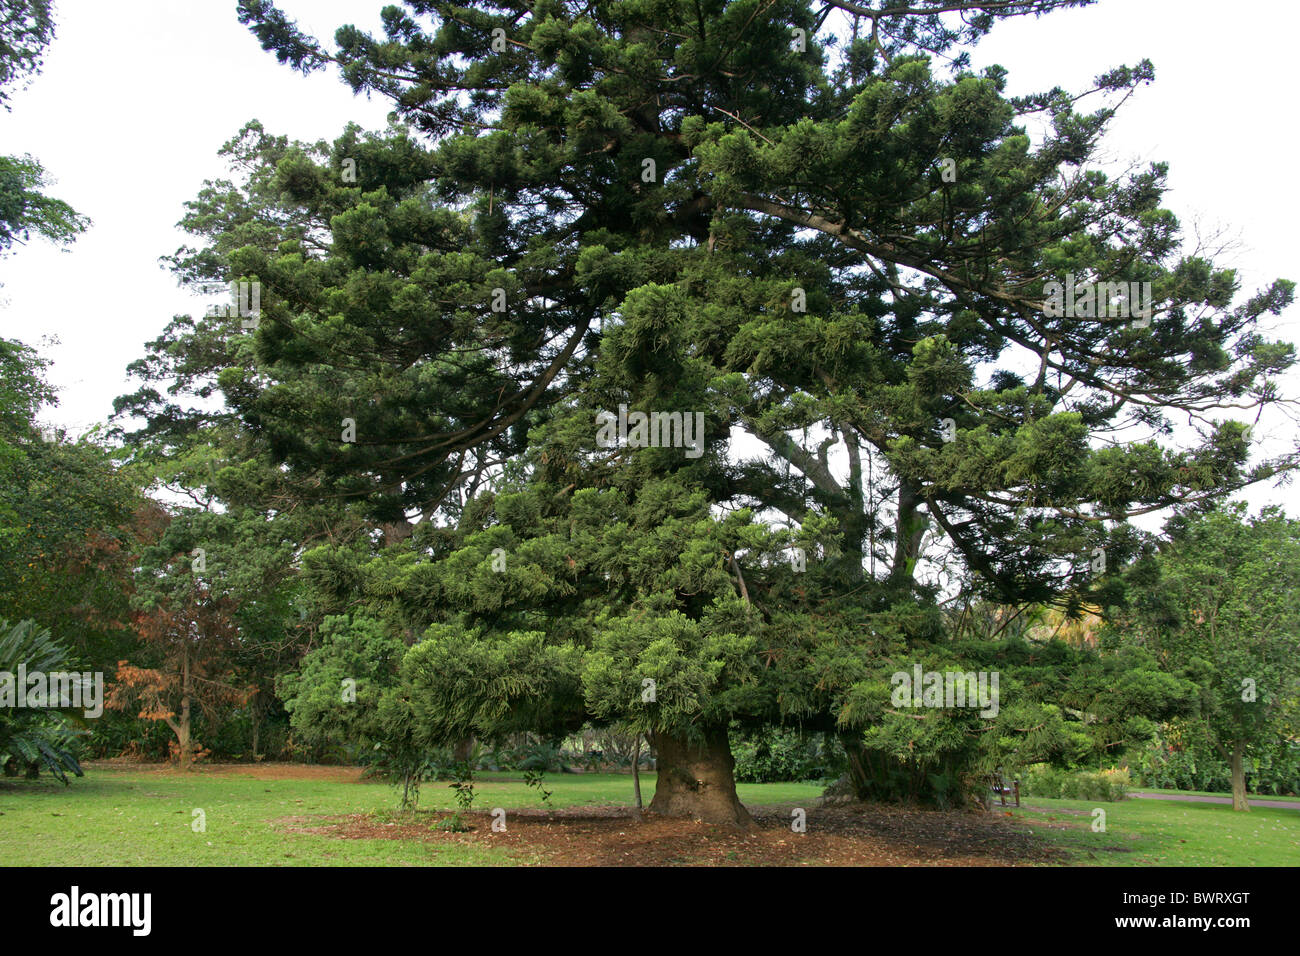 Moreton Bay Pine or Hoop Pine Tree, Araucaria cunninghamii, Araucariaceae. Durban Botanical Gardens, South Africa. Stock Photo